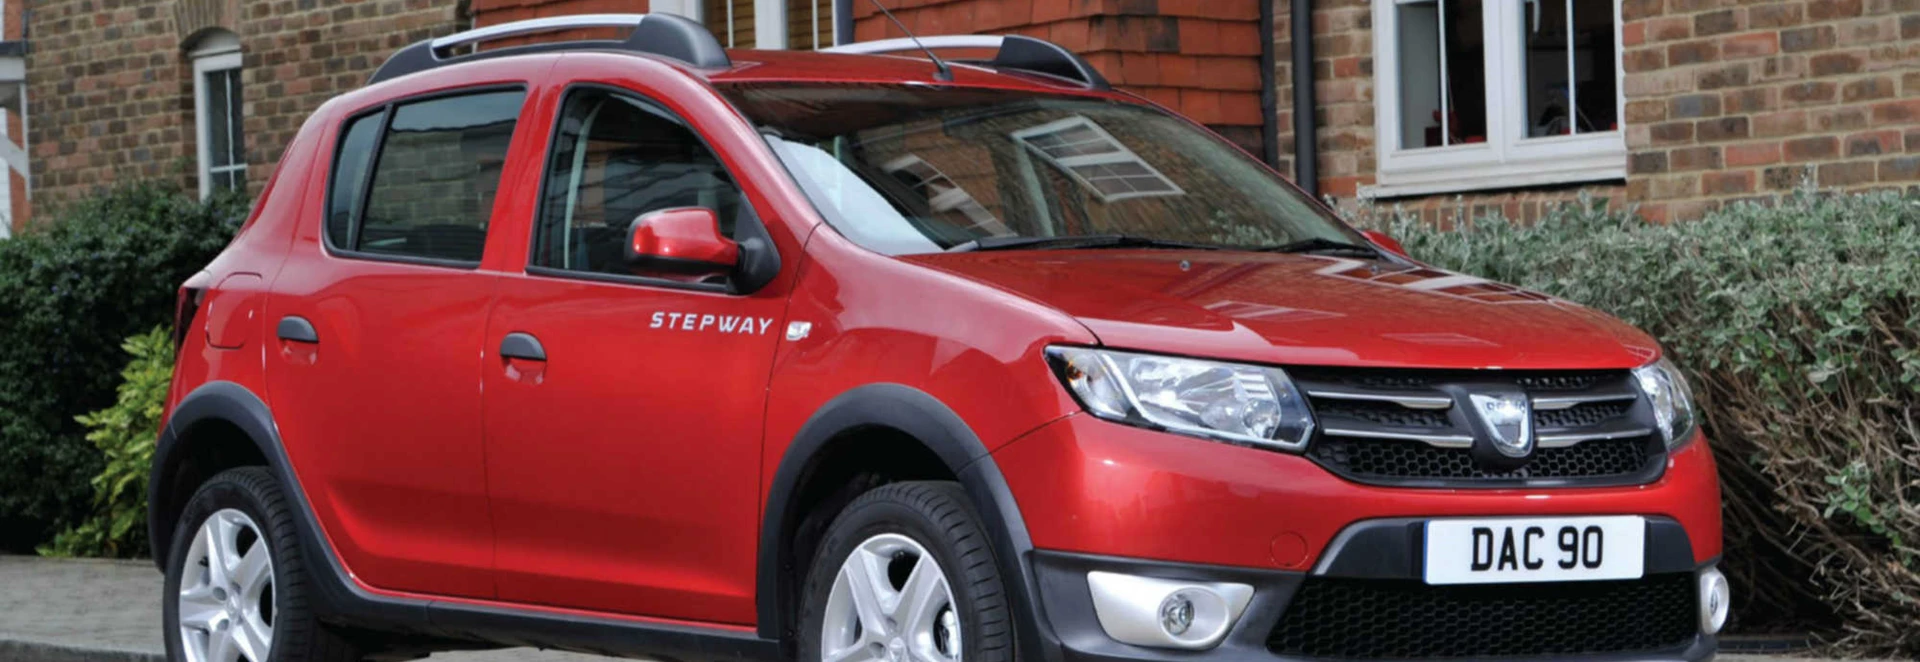 Dacia Sandero Stepway hatchback review - Car Keys